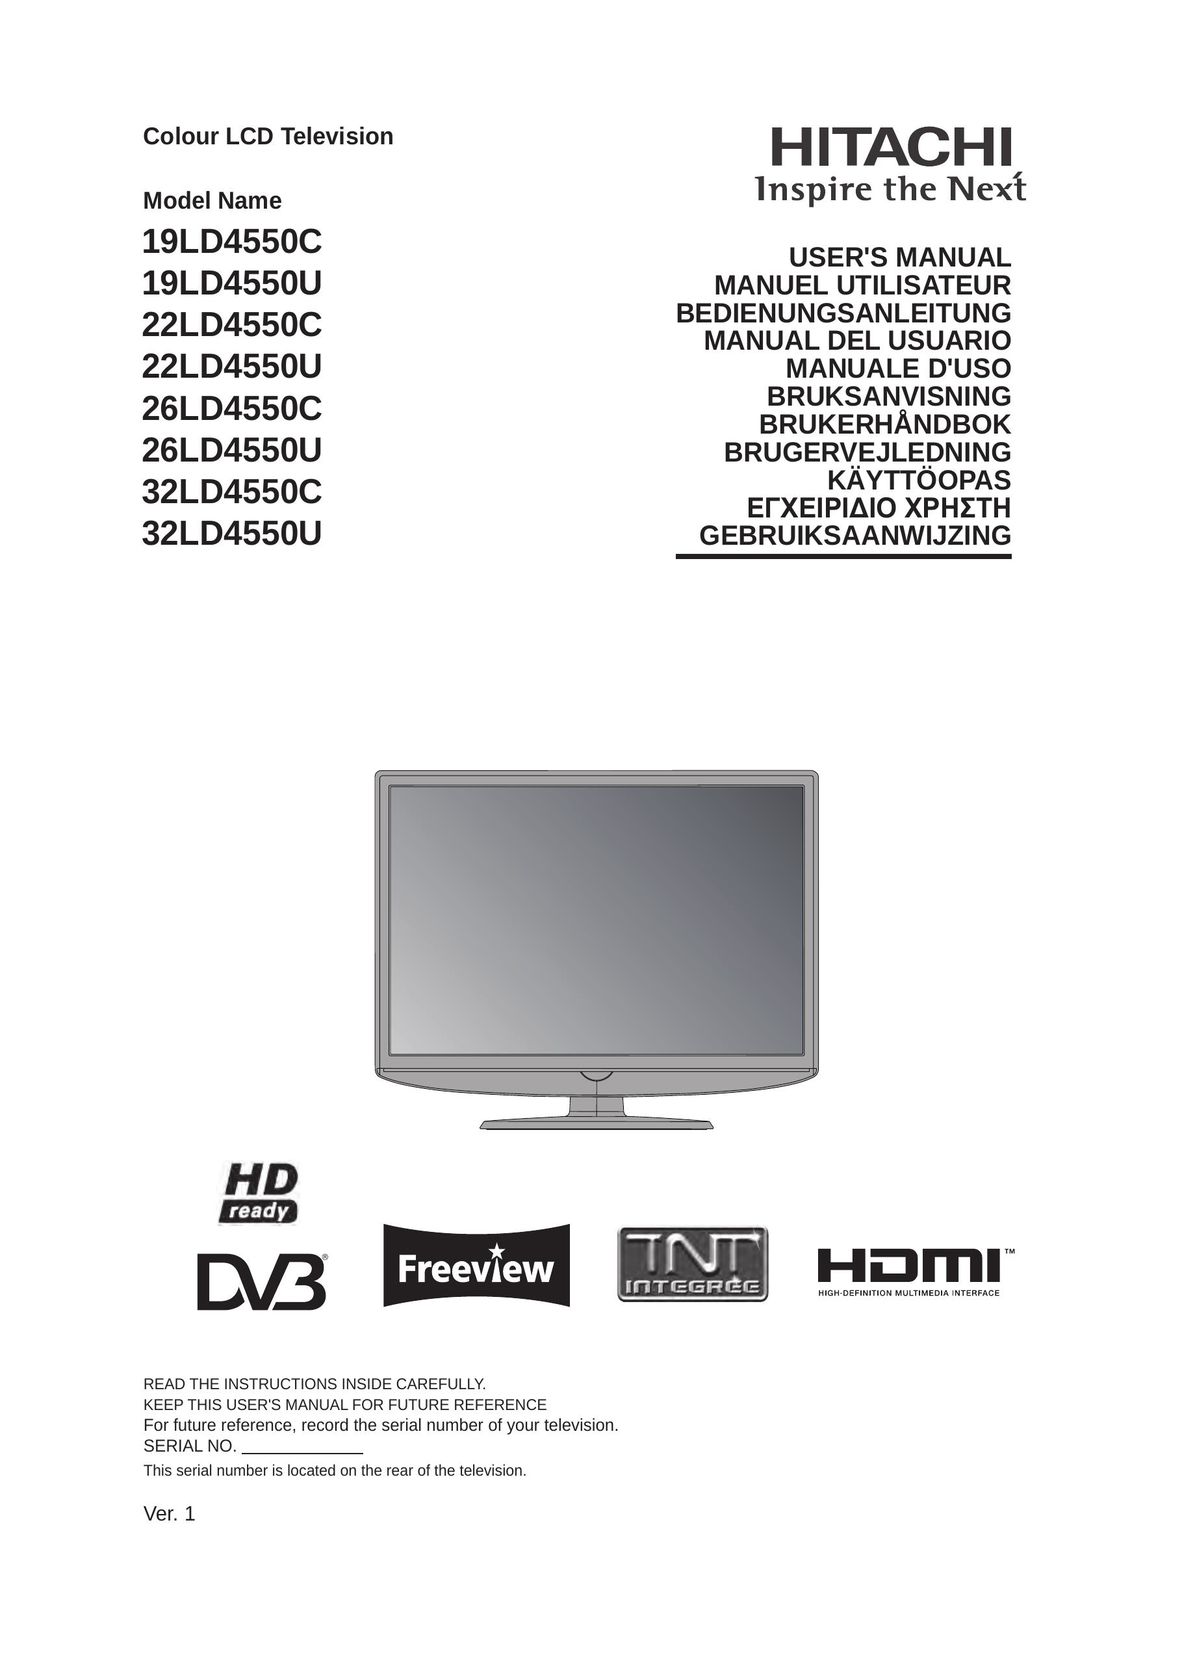 Hitachi 26LD4550C Flat Panel Television User Manual